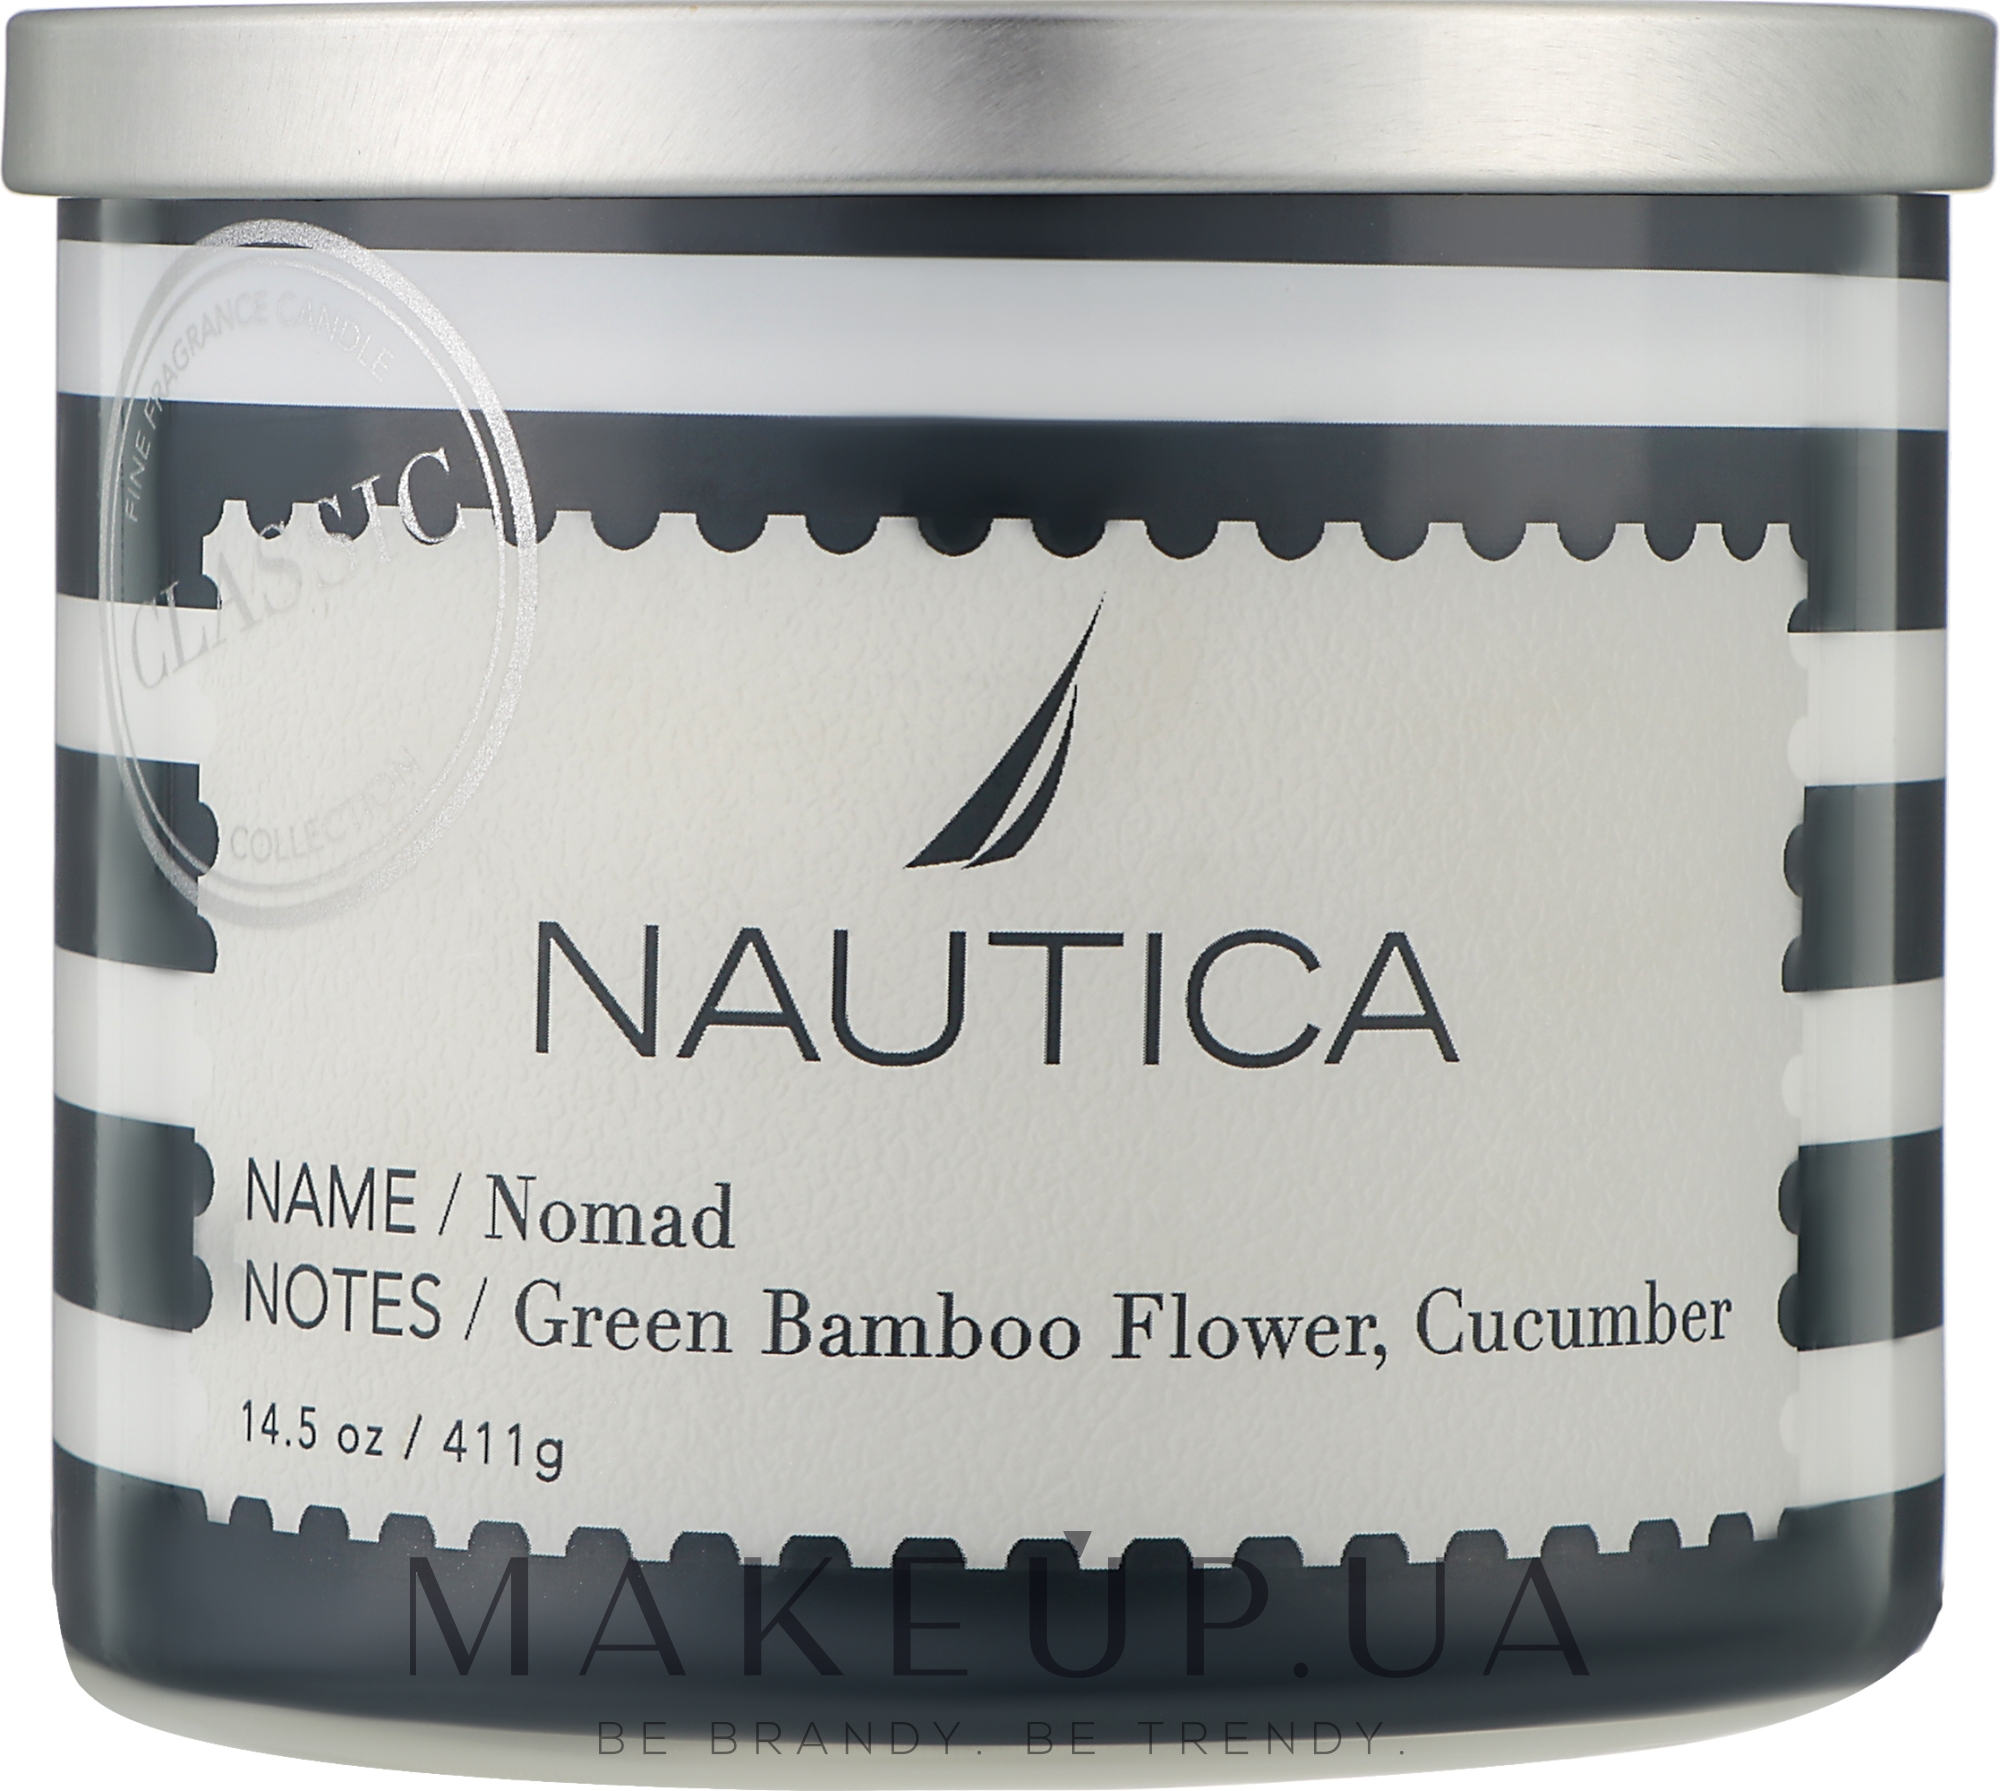 Ароматическая свеча "Зеленый бамбук и огурец" - Nautica Candle Nomad Green Bamboo Flower, Cucumber — фото 411g